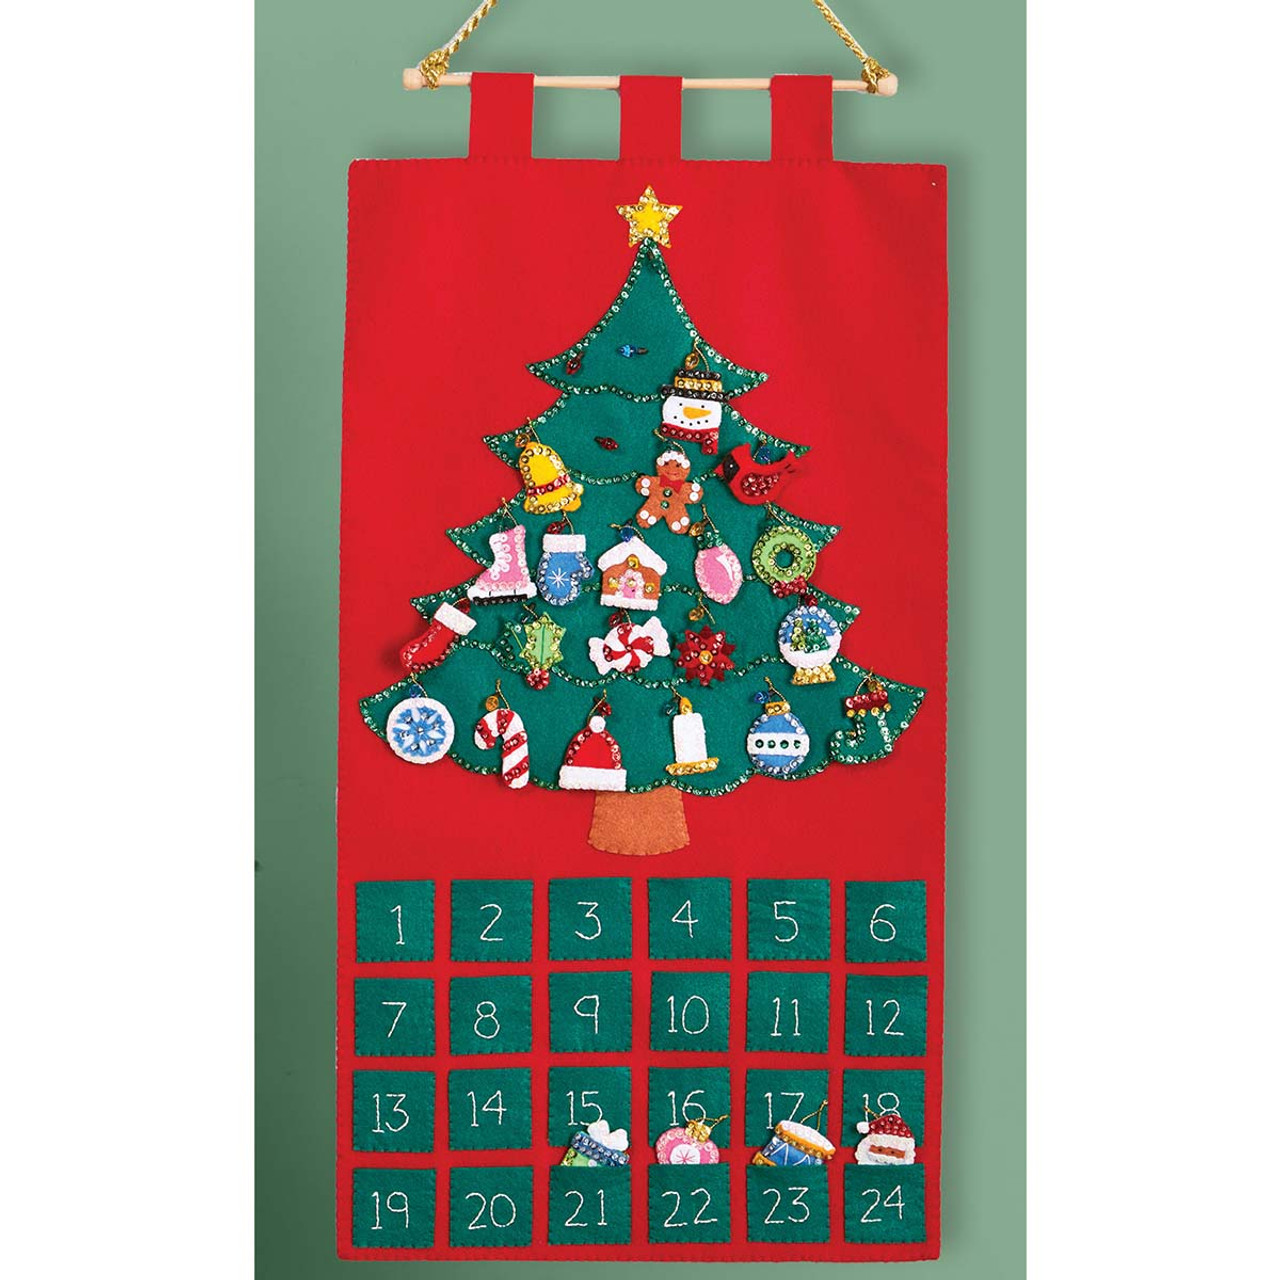 Christmas Diamond Art Kits: 25 Best Diamond Painting Kits to Add Sparkle to  Your Holiday Decorations, Holidays